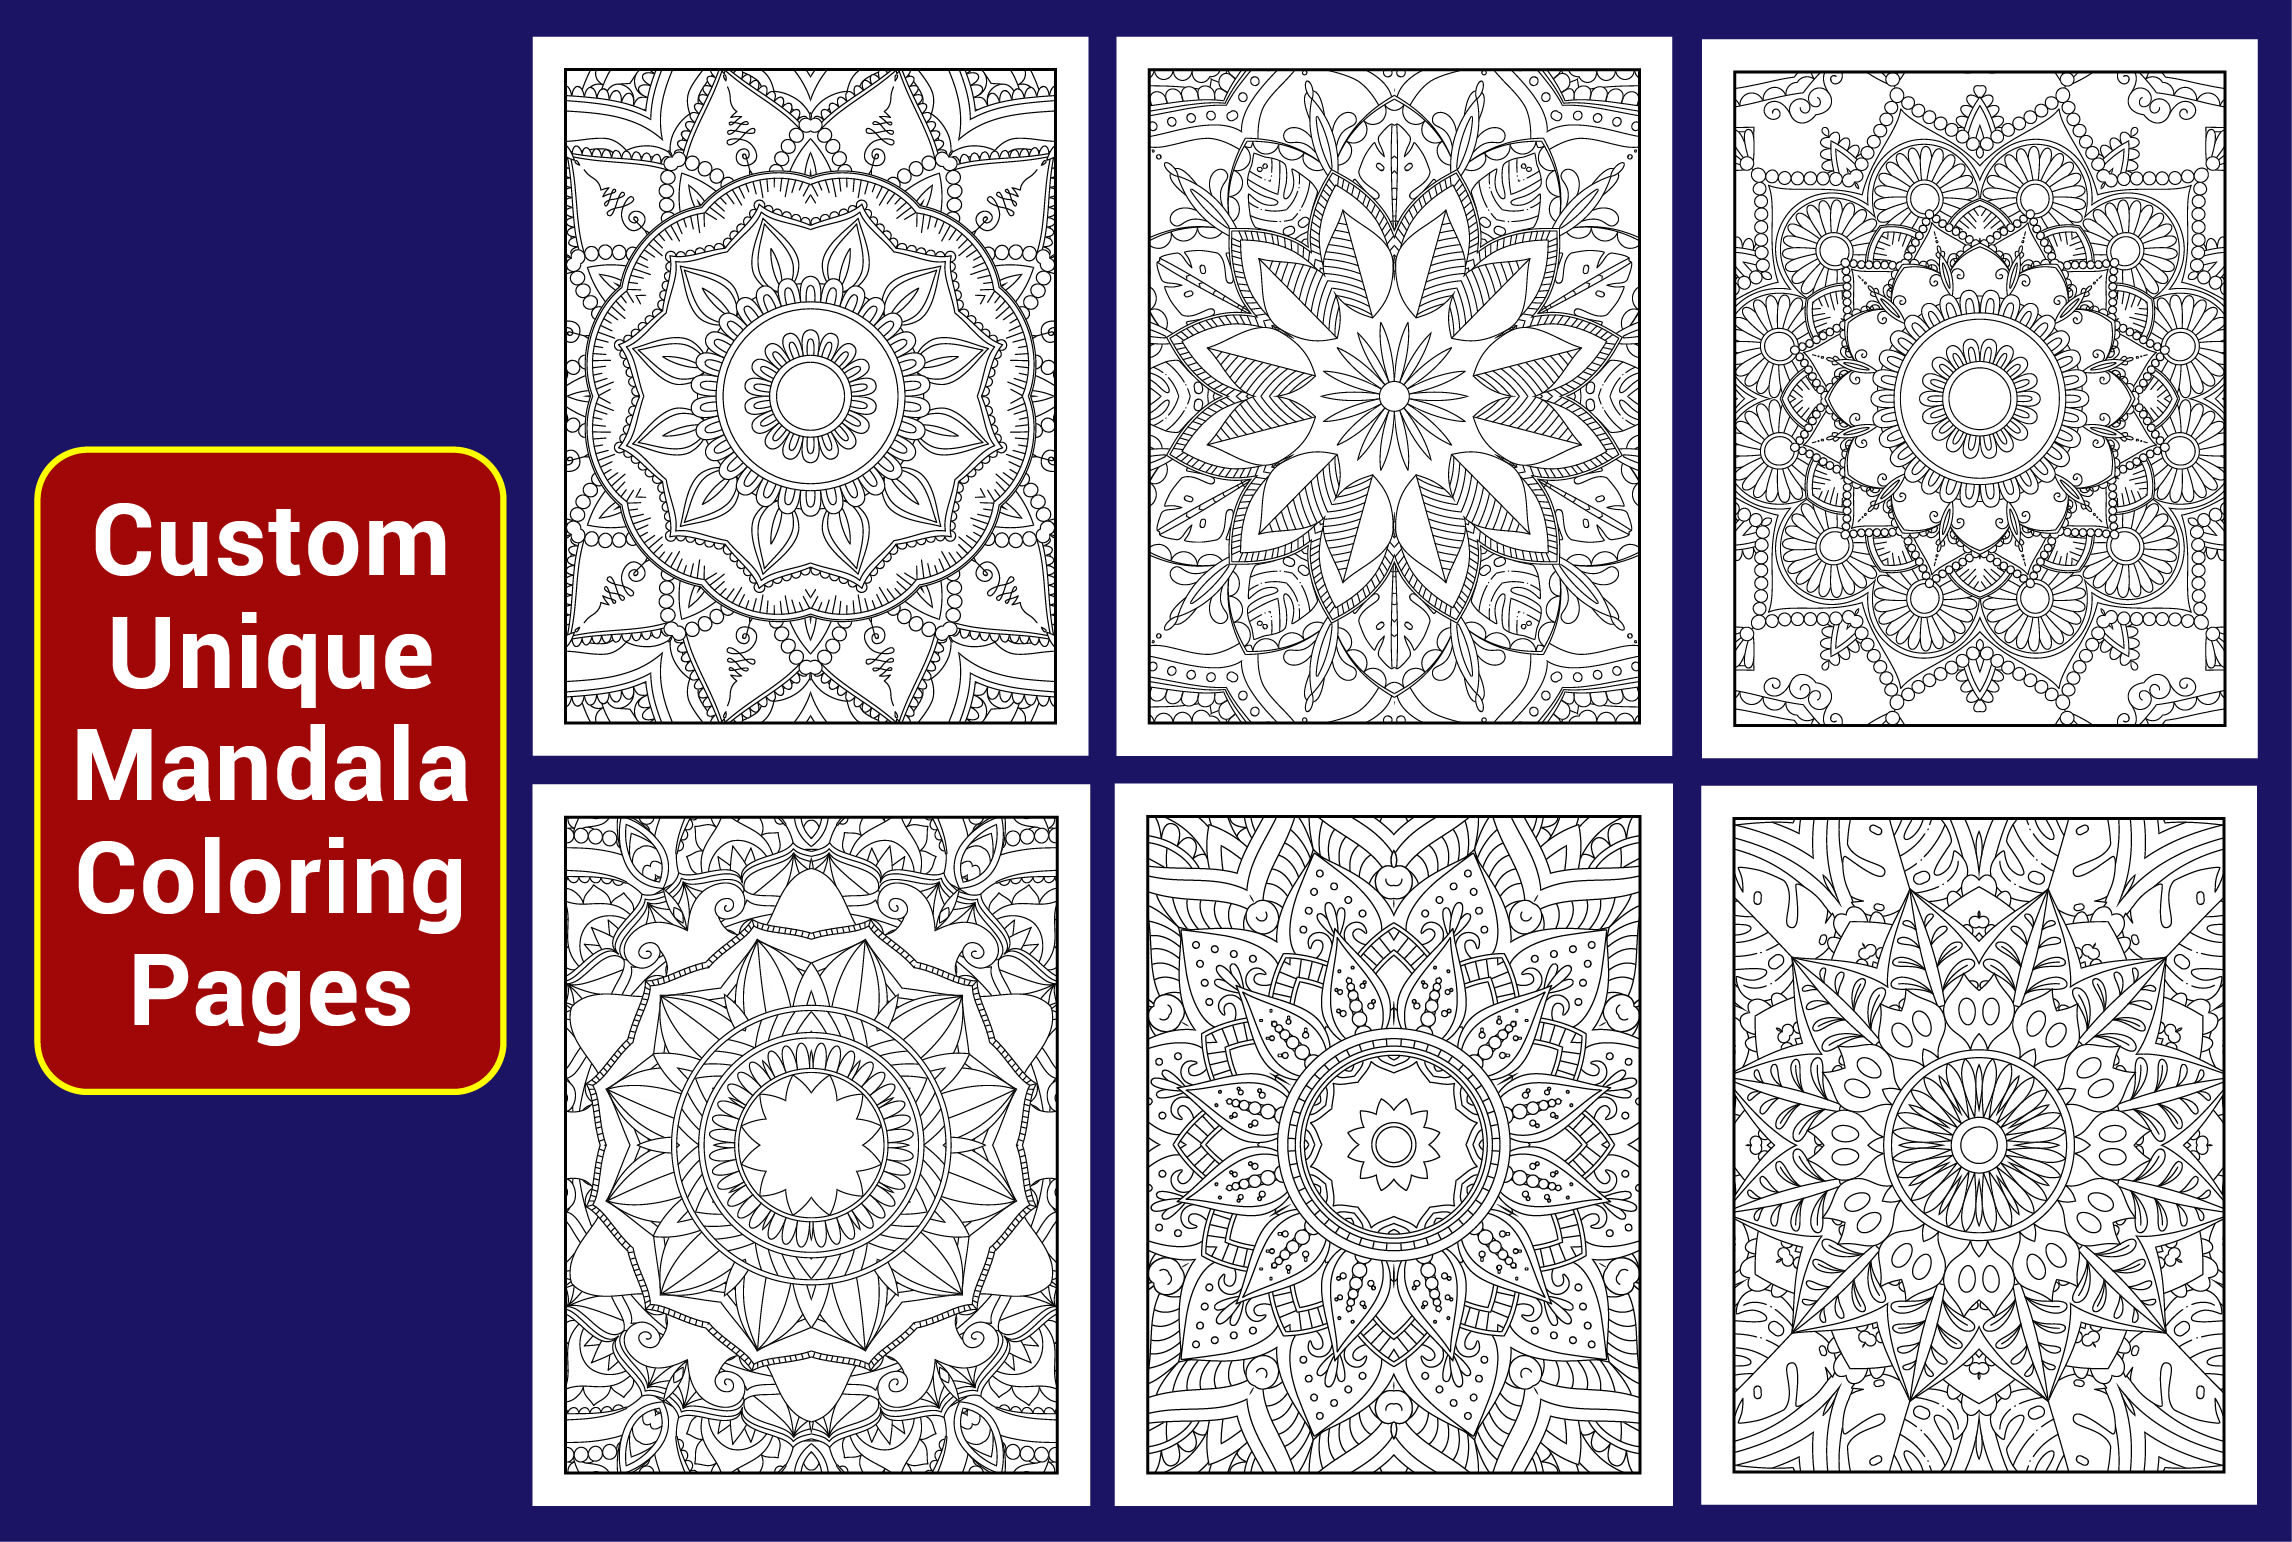 Free and customizable mandala templates